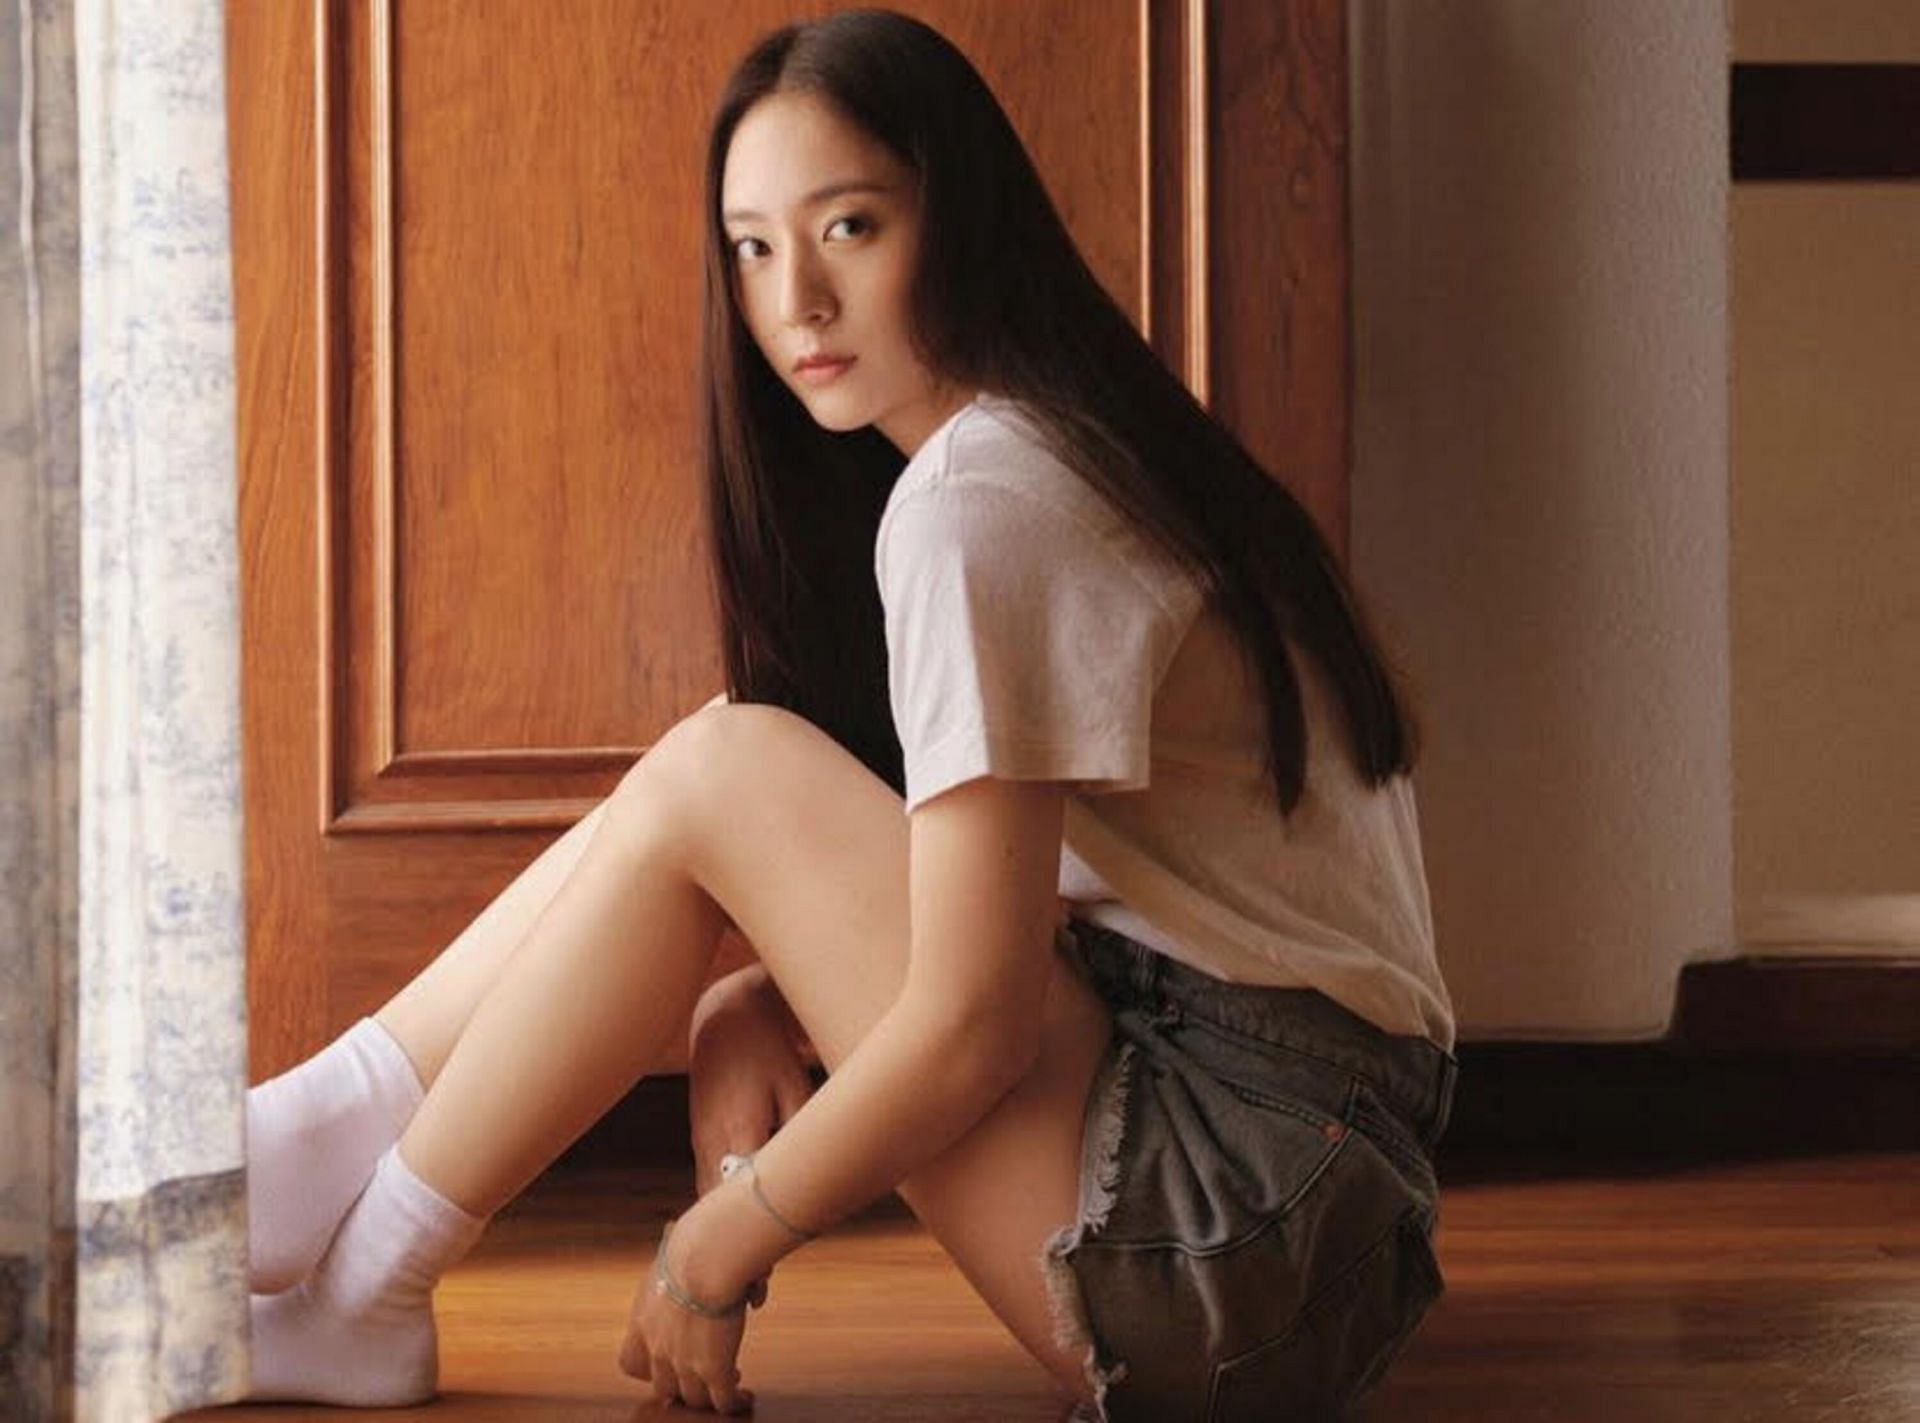 The actress will star alongside Kim Jae-wook (Image via vousmevoyez/Instagram)